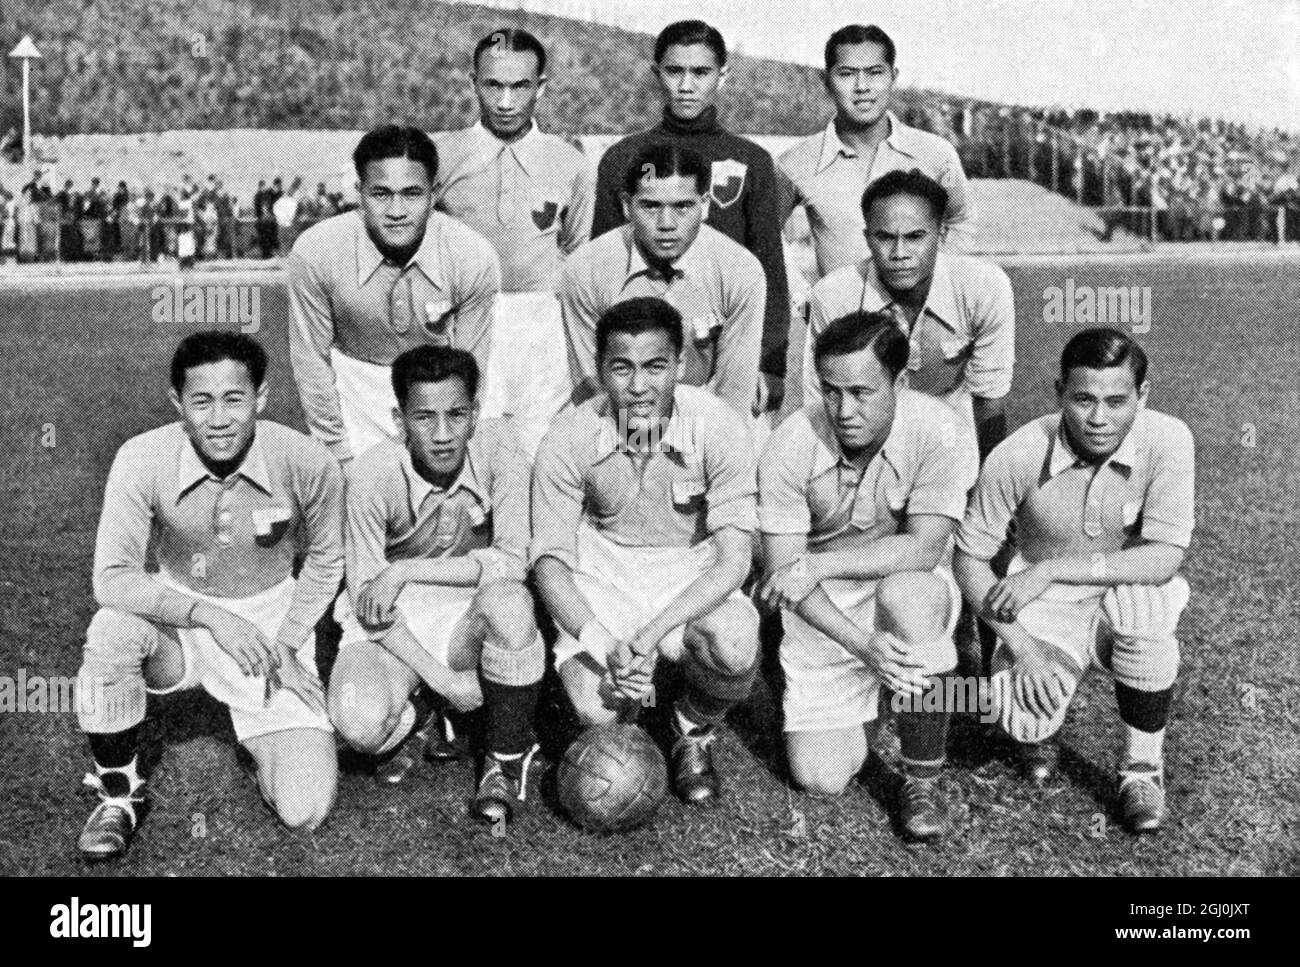 Jeux Olympiques de 1936, Berlin - équipes de football du monde entier - Chine Fussballmannschaften aus aller Welt - Chine ©TopFoto Banque D'Images